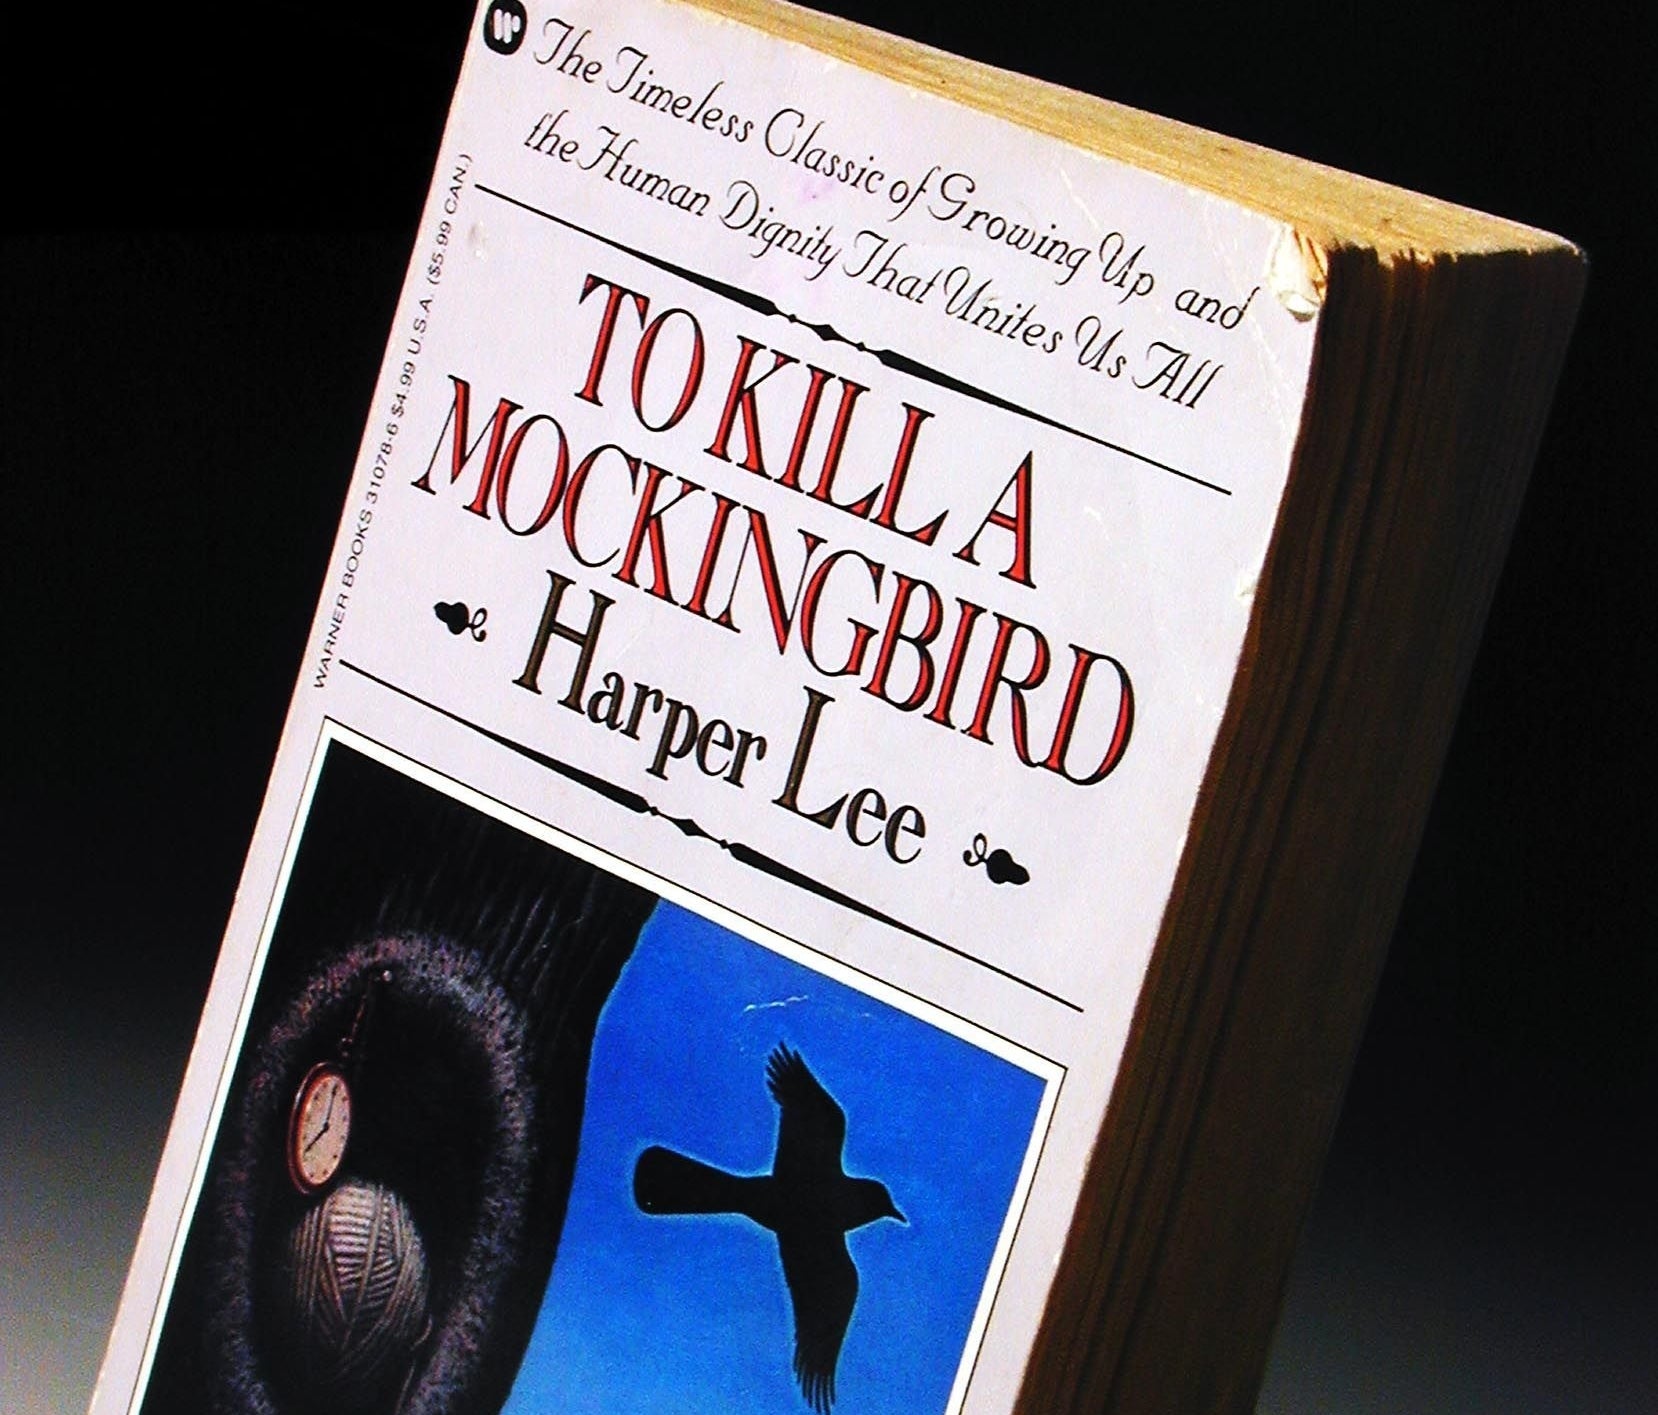 &quot;To Kill a Mockingbird&quot; by Harper Lee